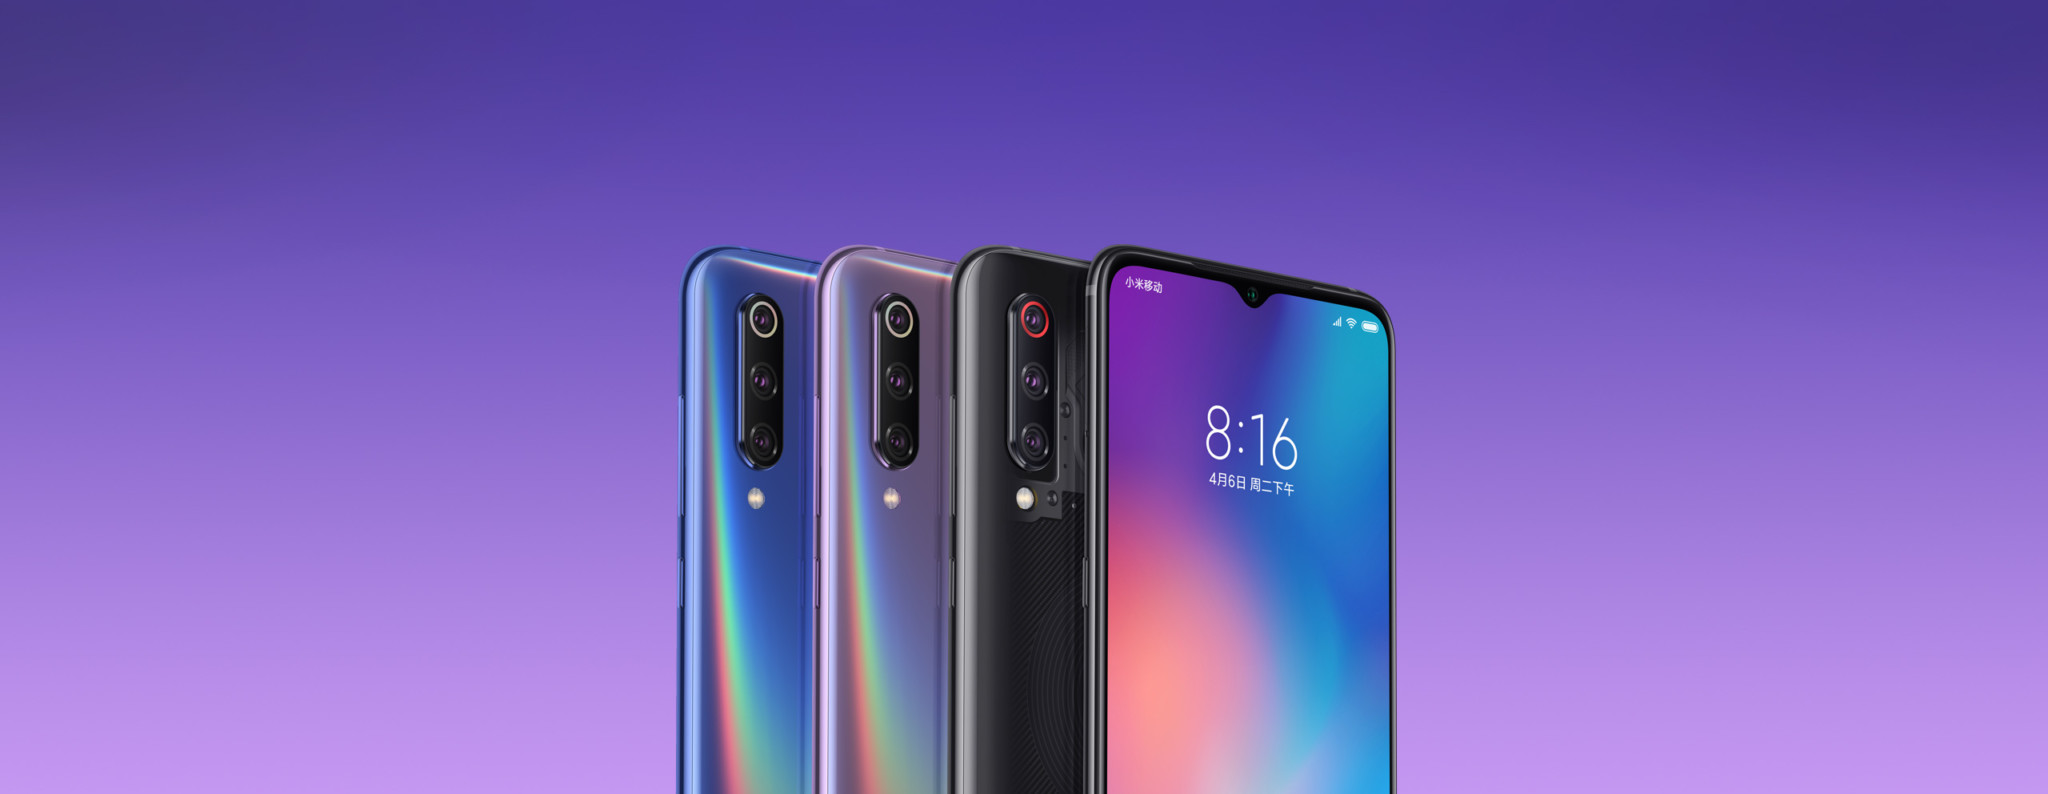 Xiaomi Mi 9 featured